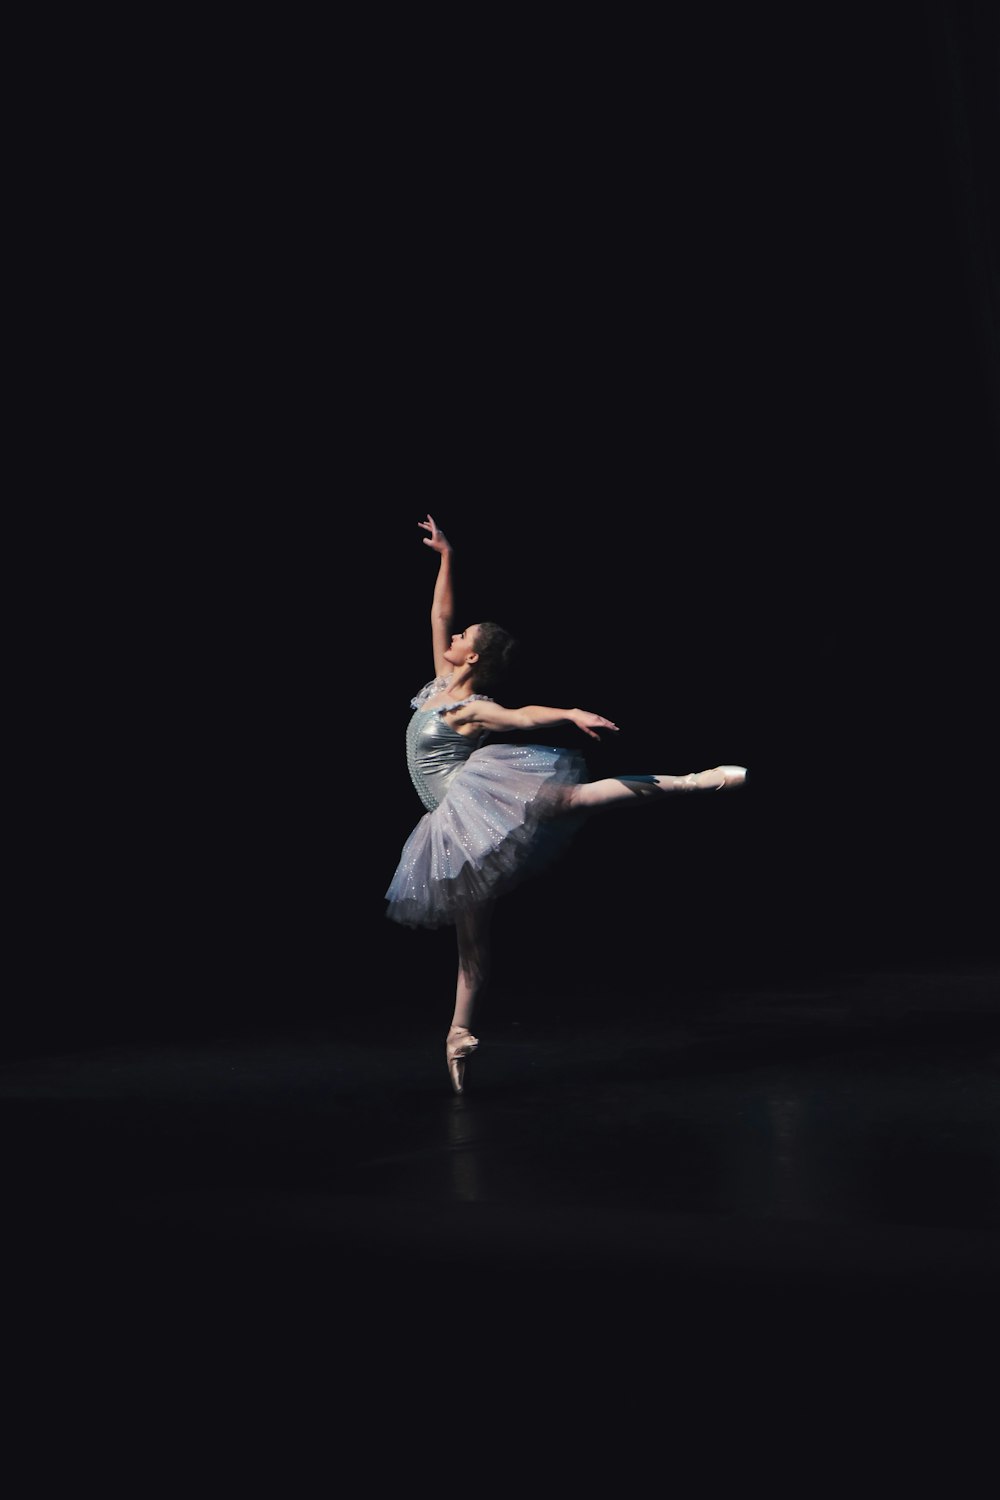 Ballerinas Pictures | Download Free Images on Unsplash